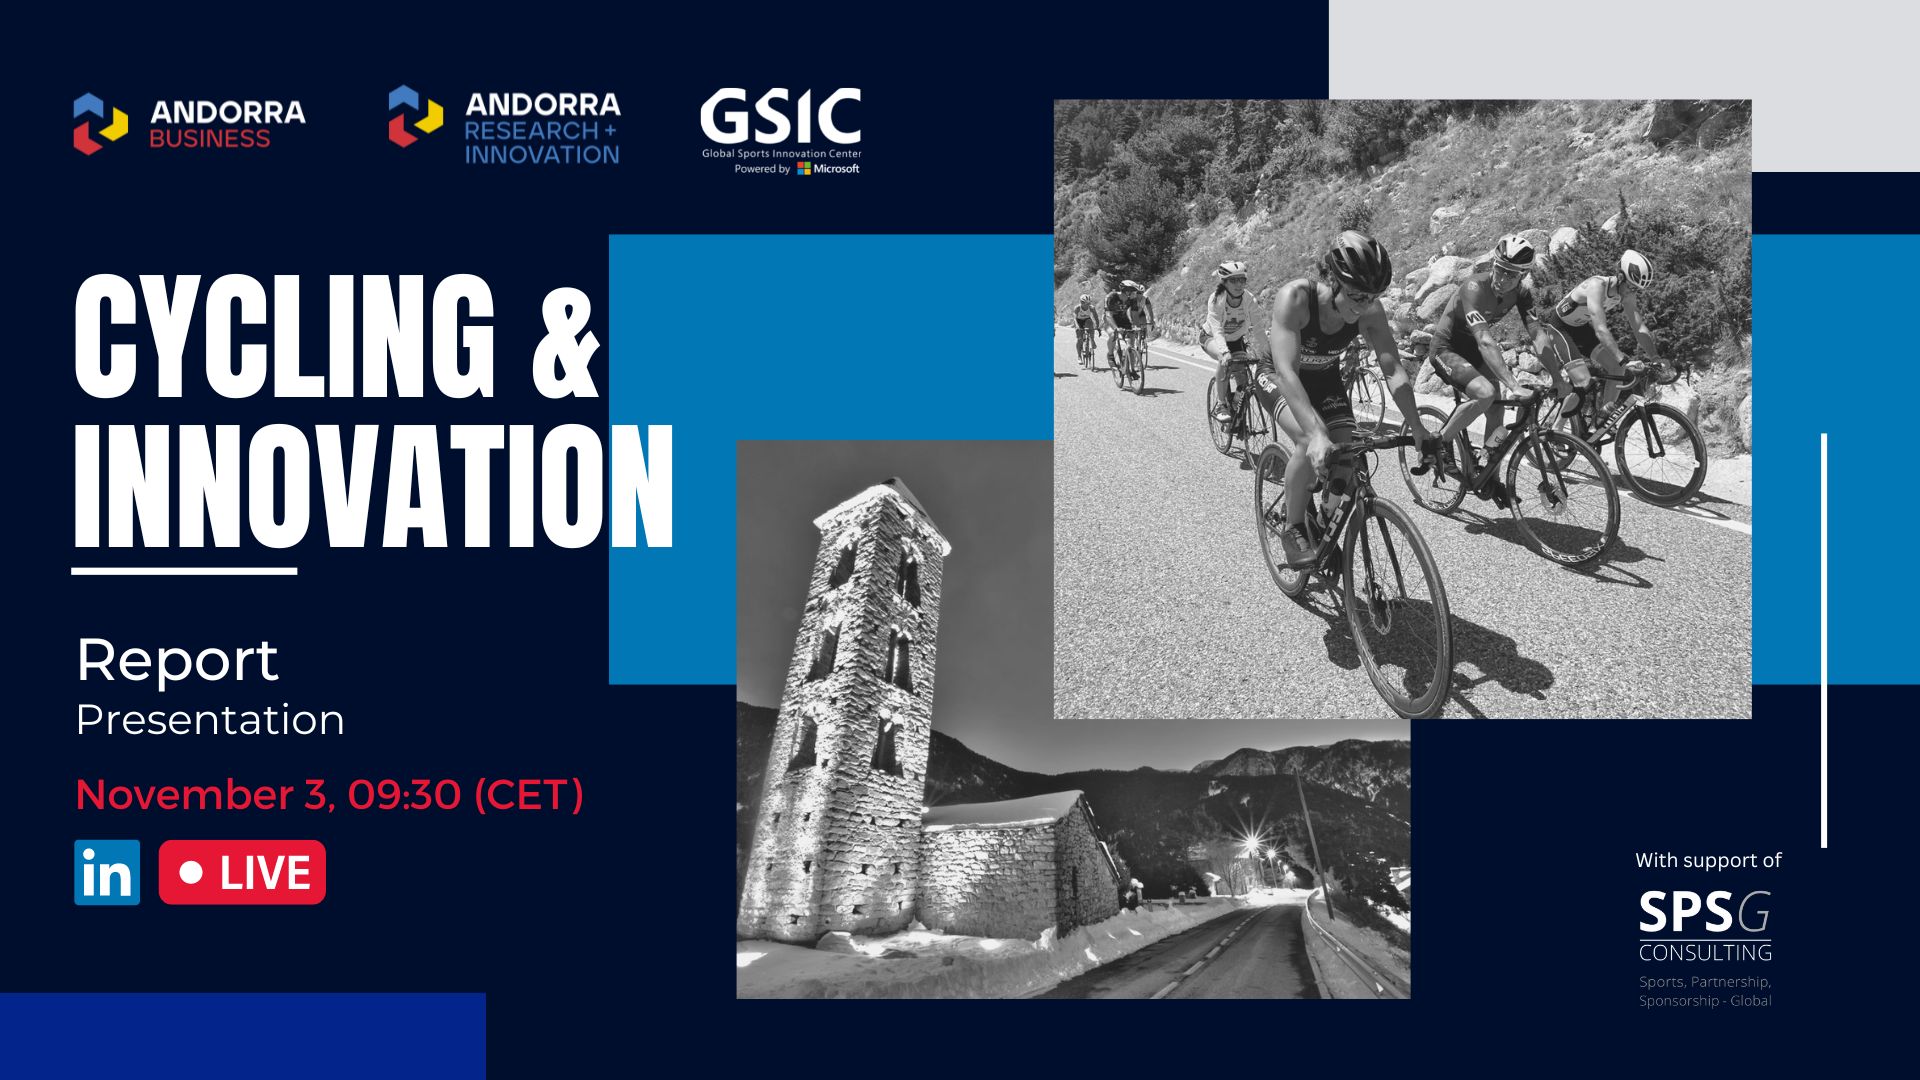 LinkedIn Live GSIC - Cycling & Innovation | Cycling Report Presentation